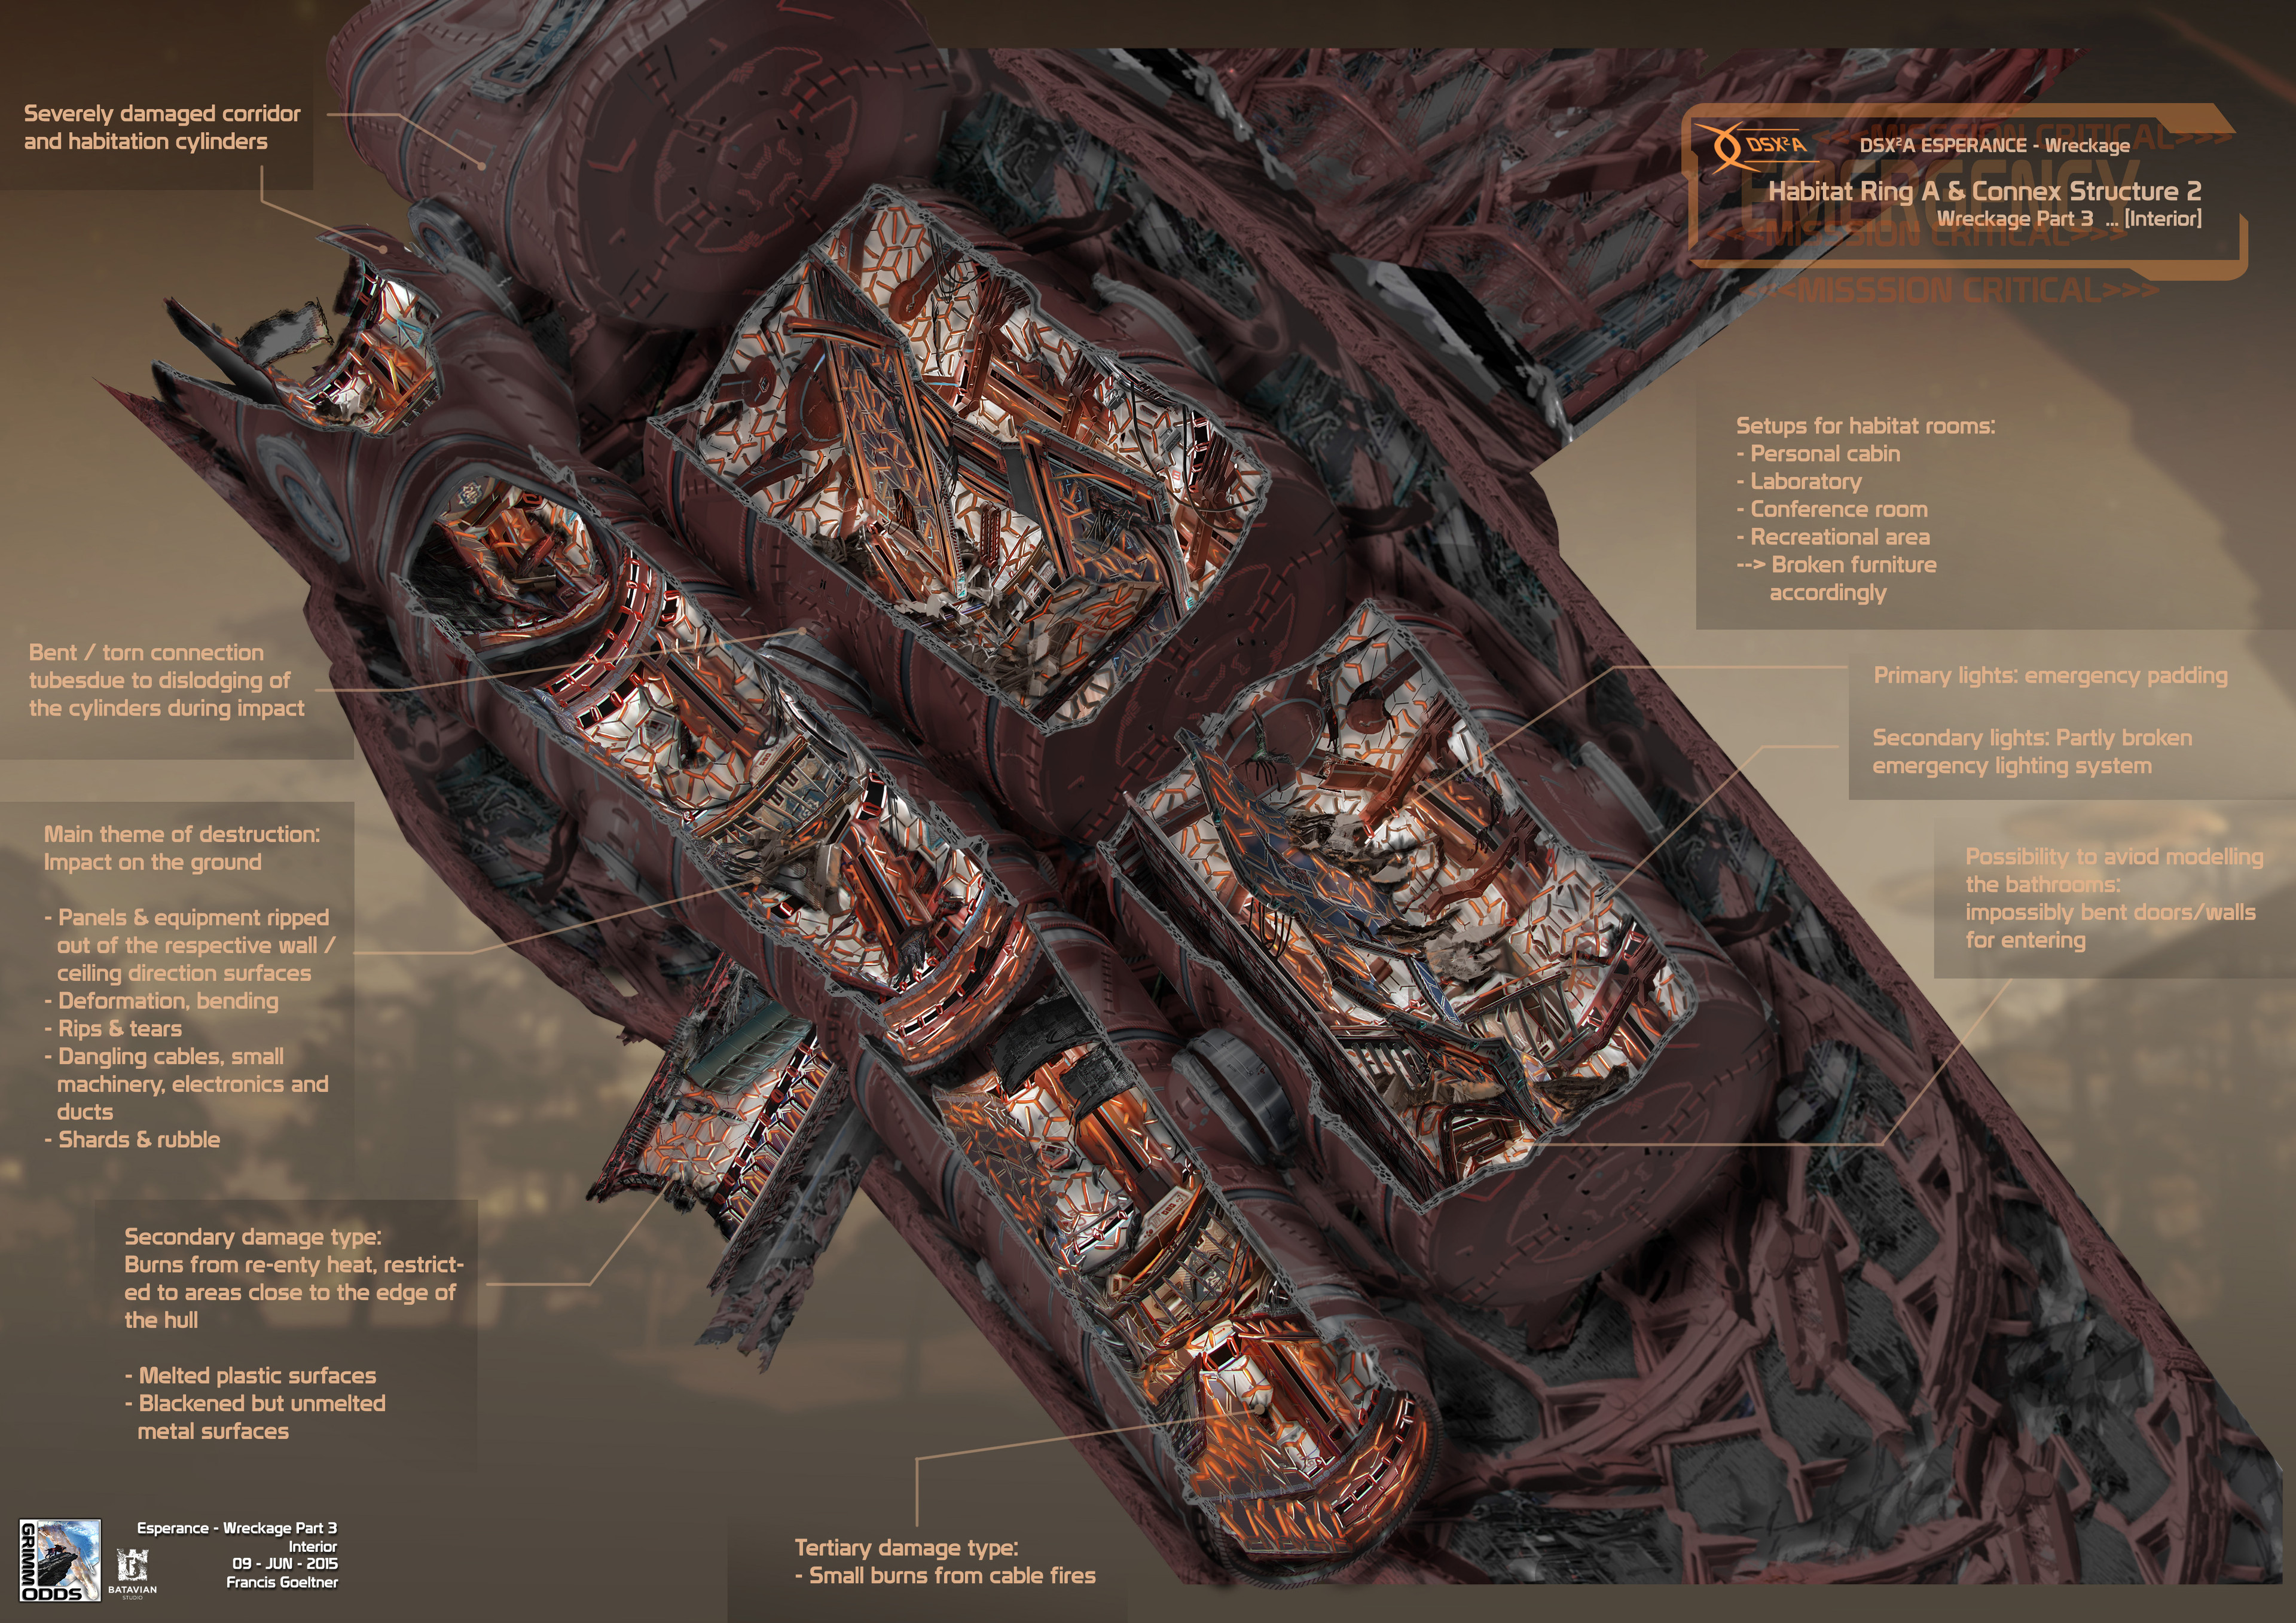 Grimm Odds - Spaceship wreckage interior - Room location and deformation